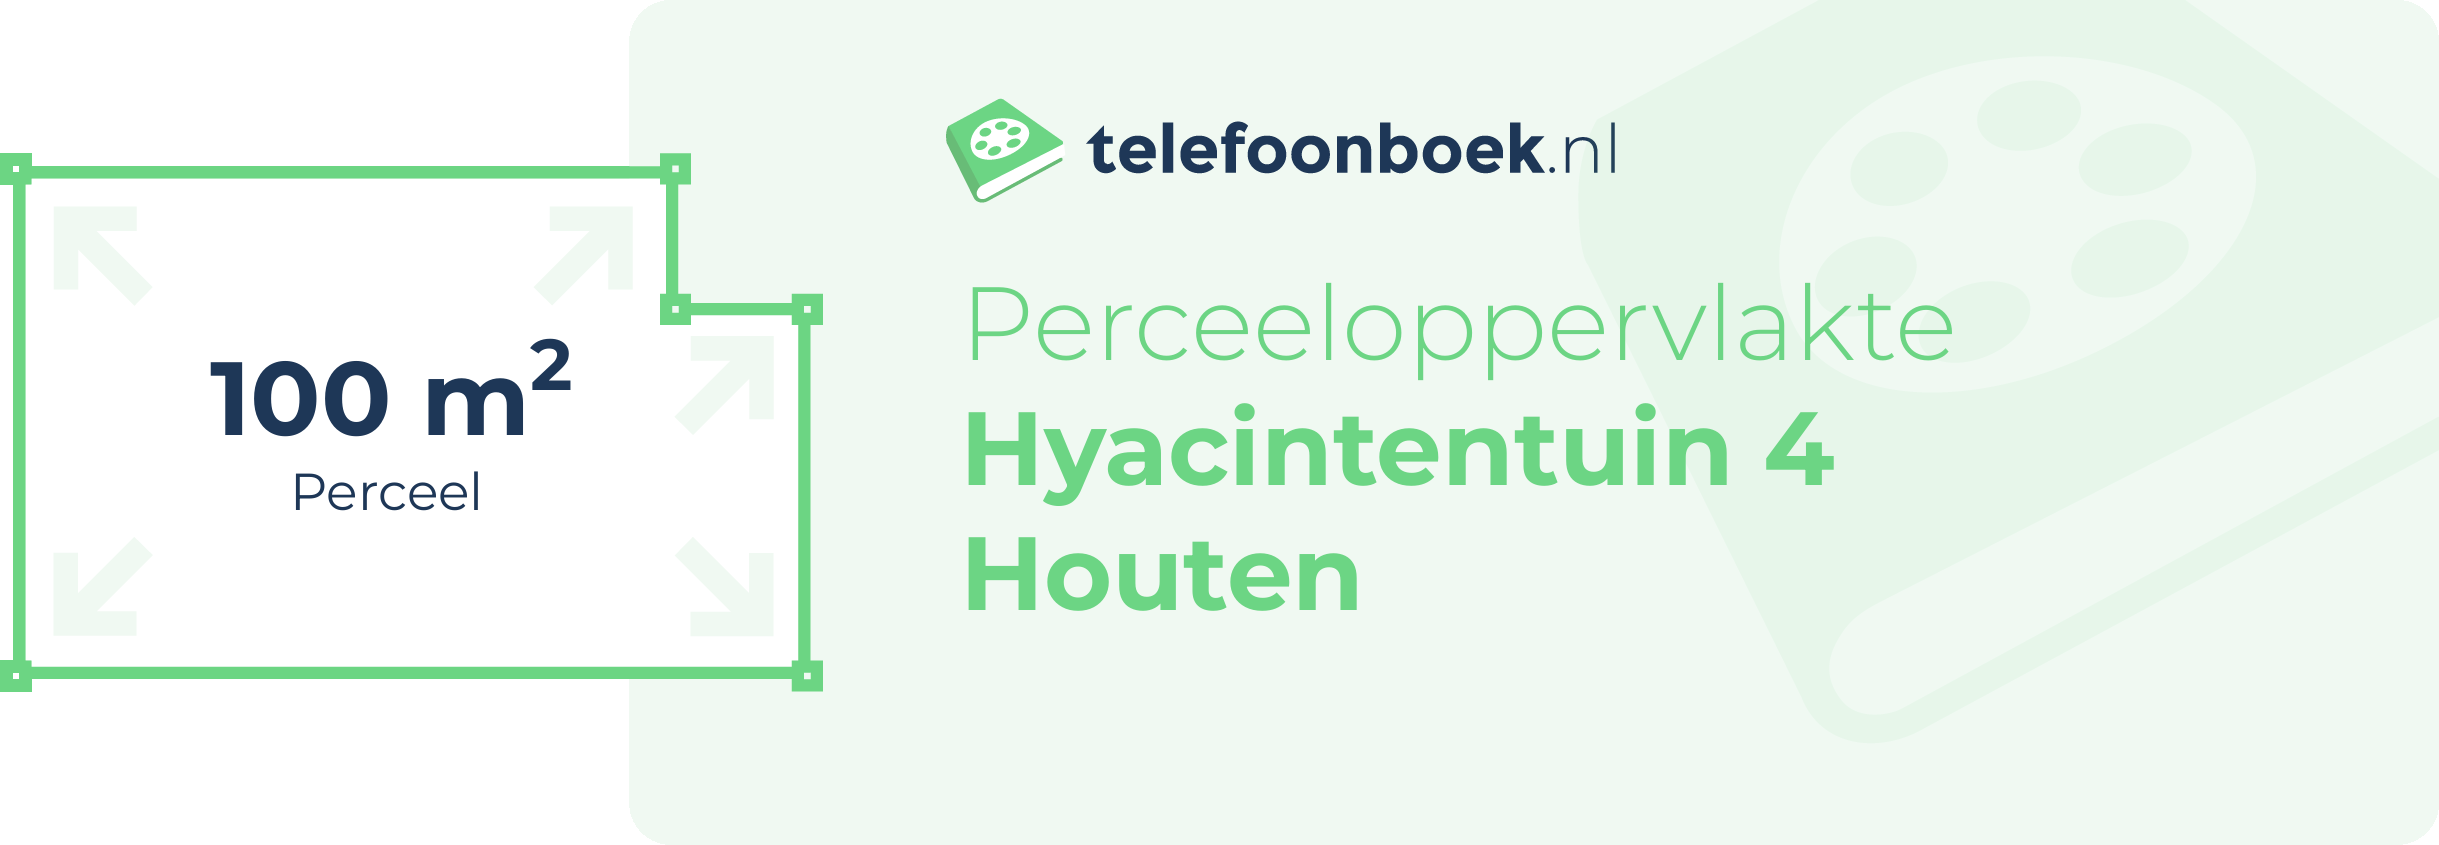 Perceeloppervlakte Hyacintentuin 4 Houten